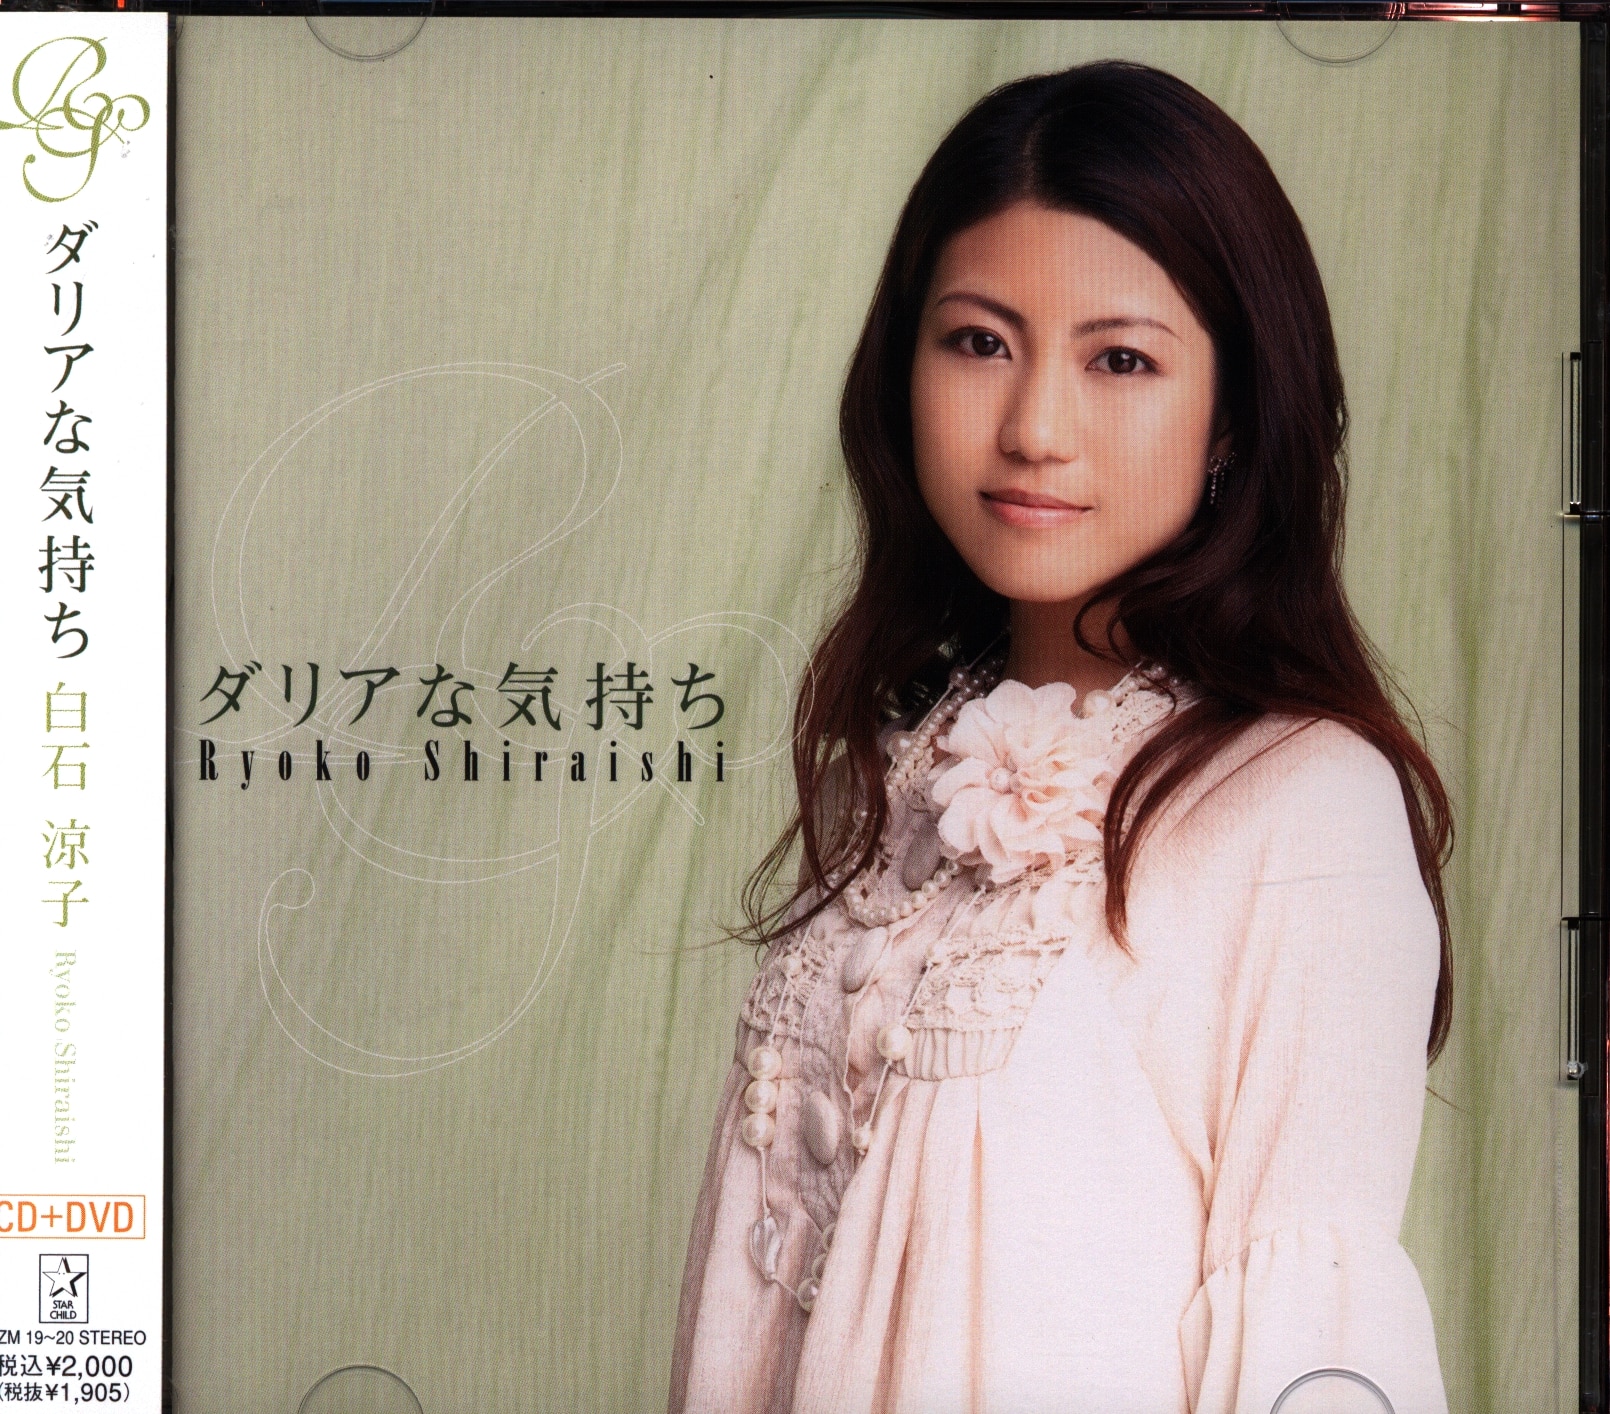 Voice Actor CD Ryoko Shiraishi / Dahlia Feelings | MANDARAKE 在线商店